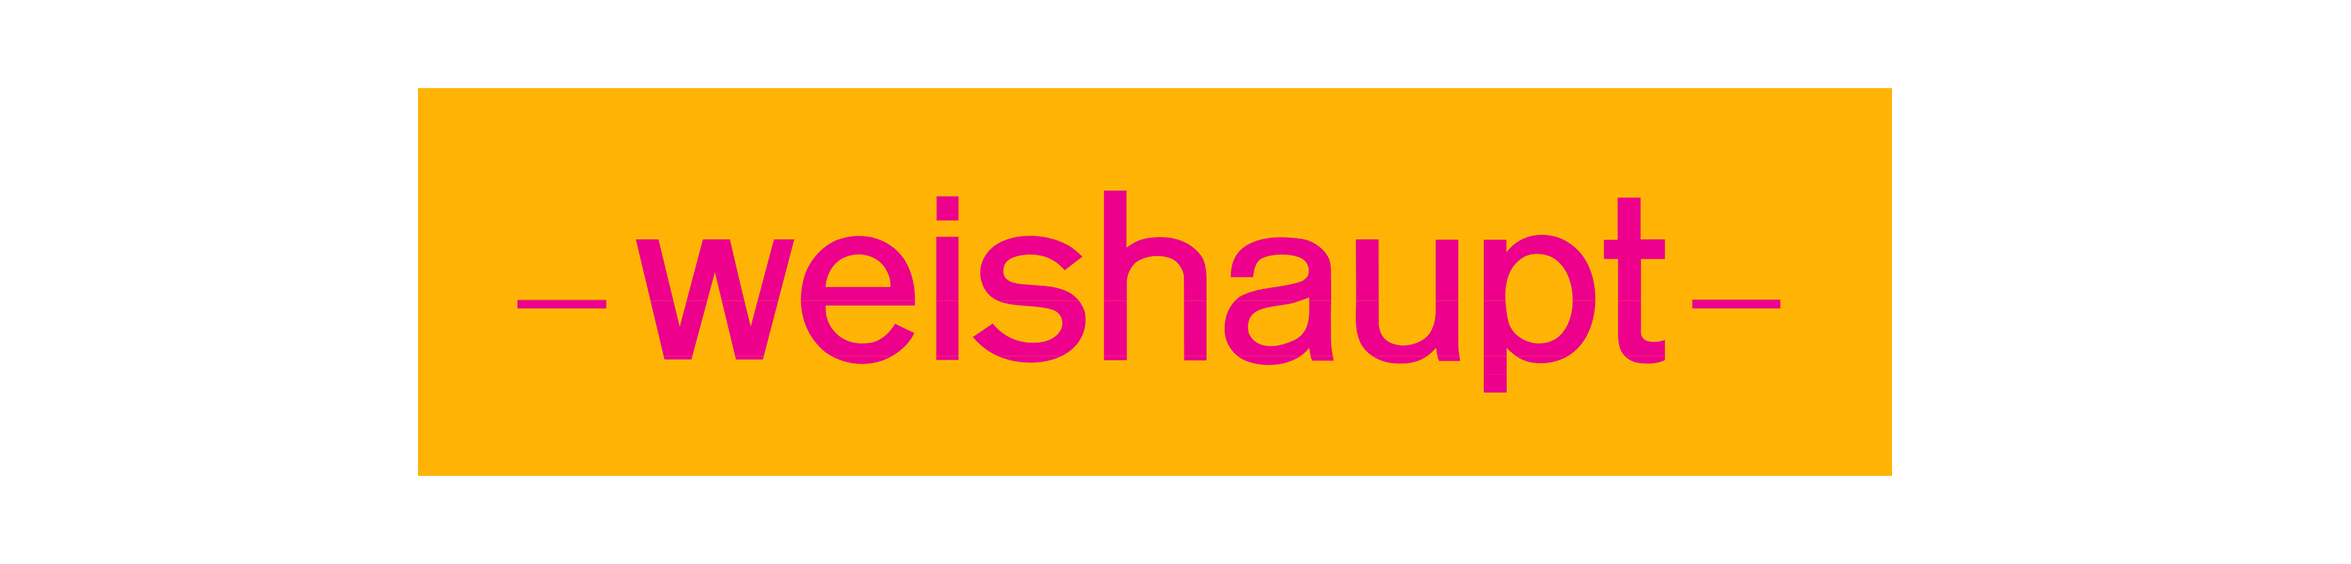 Sanitherm GmbH Logo weishaupt